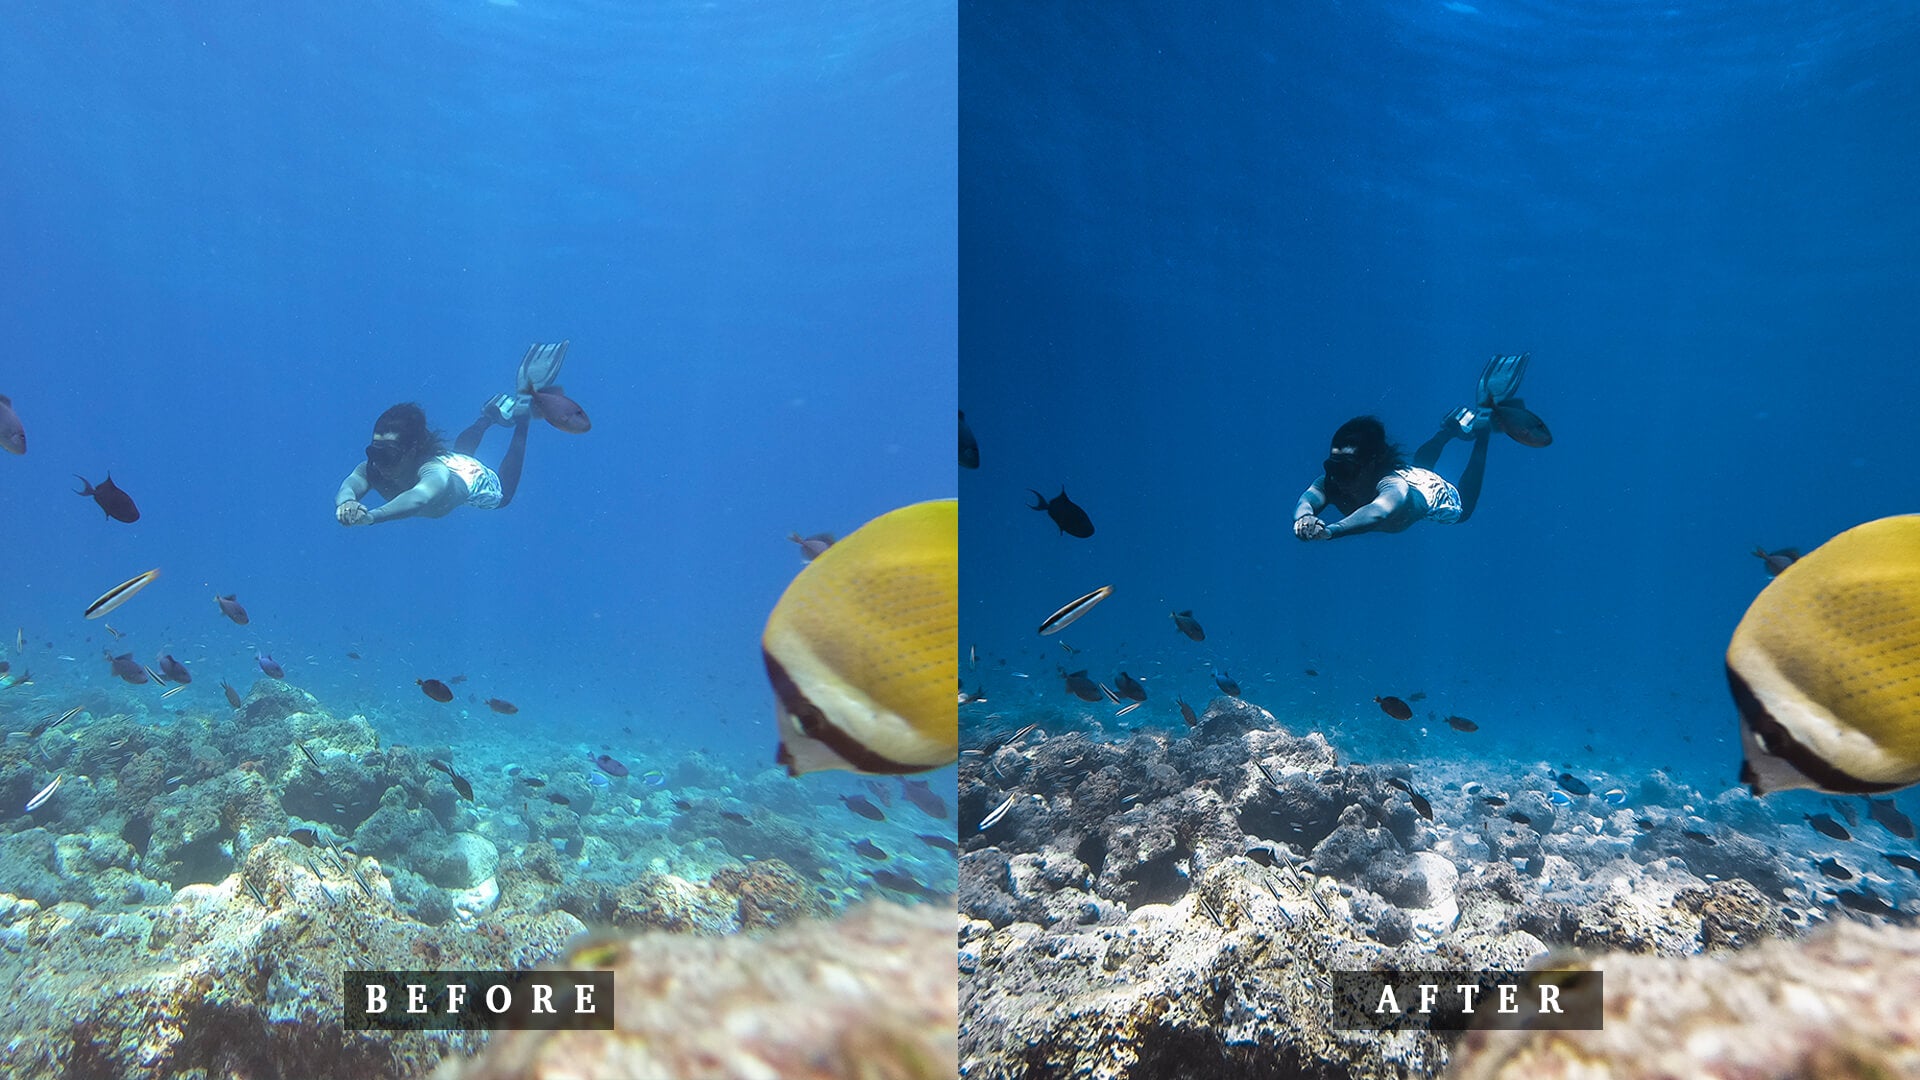 'Fenfushi' Open Water Preset for Underwater Photo Editing